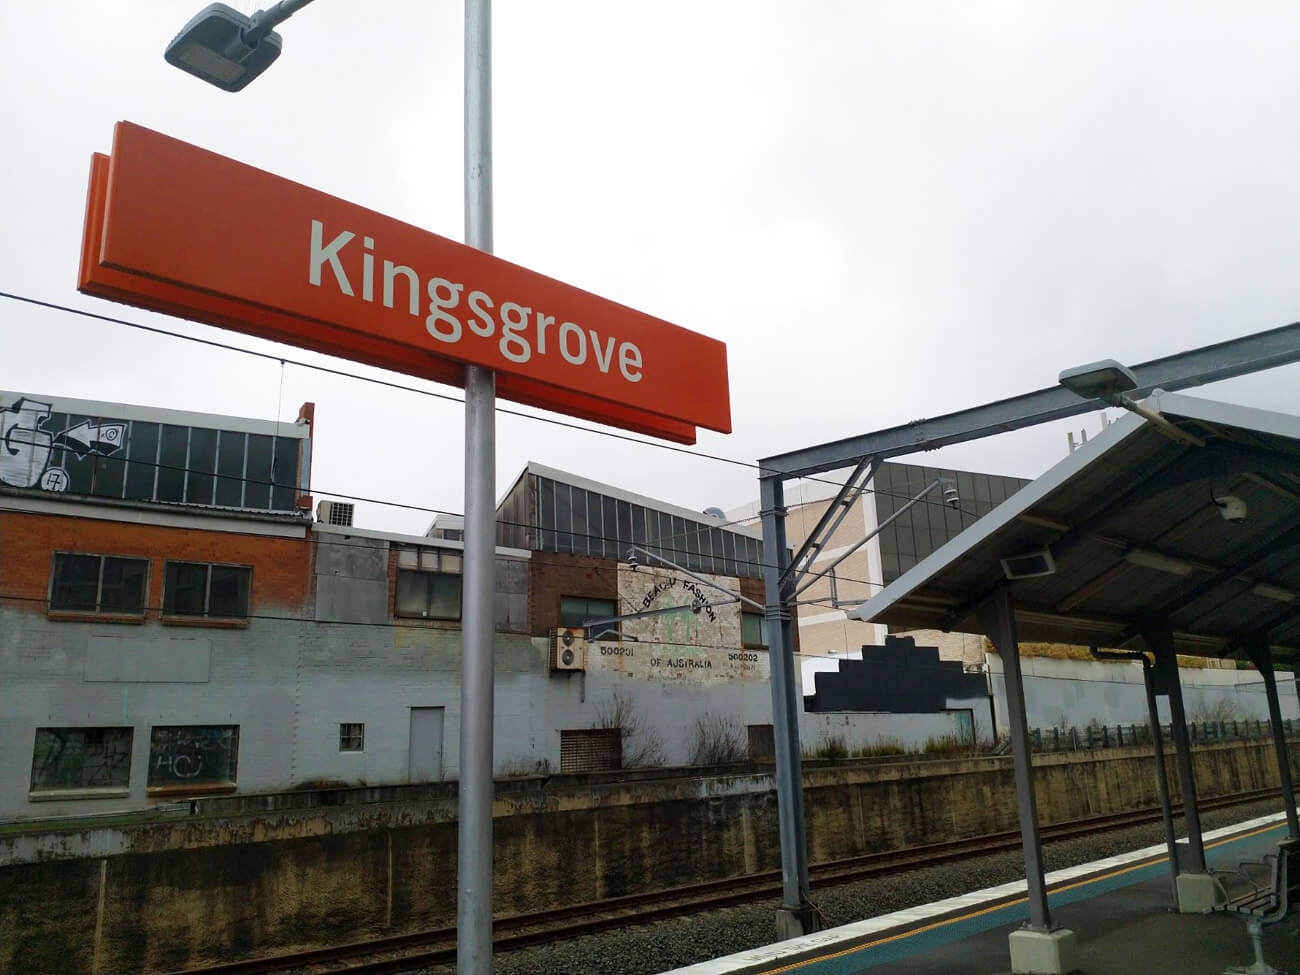 About Kingsgrove